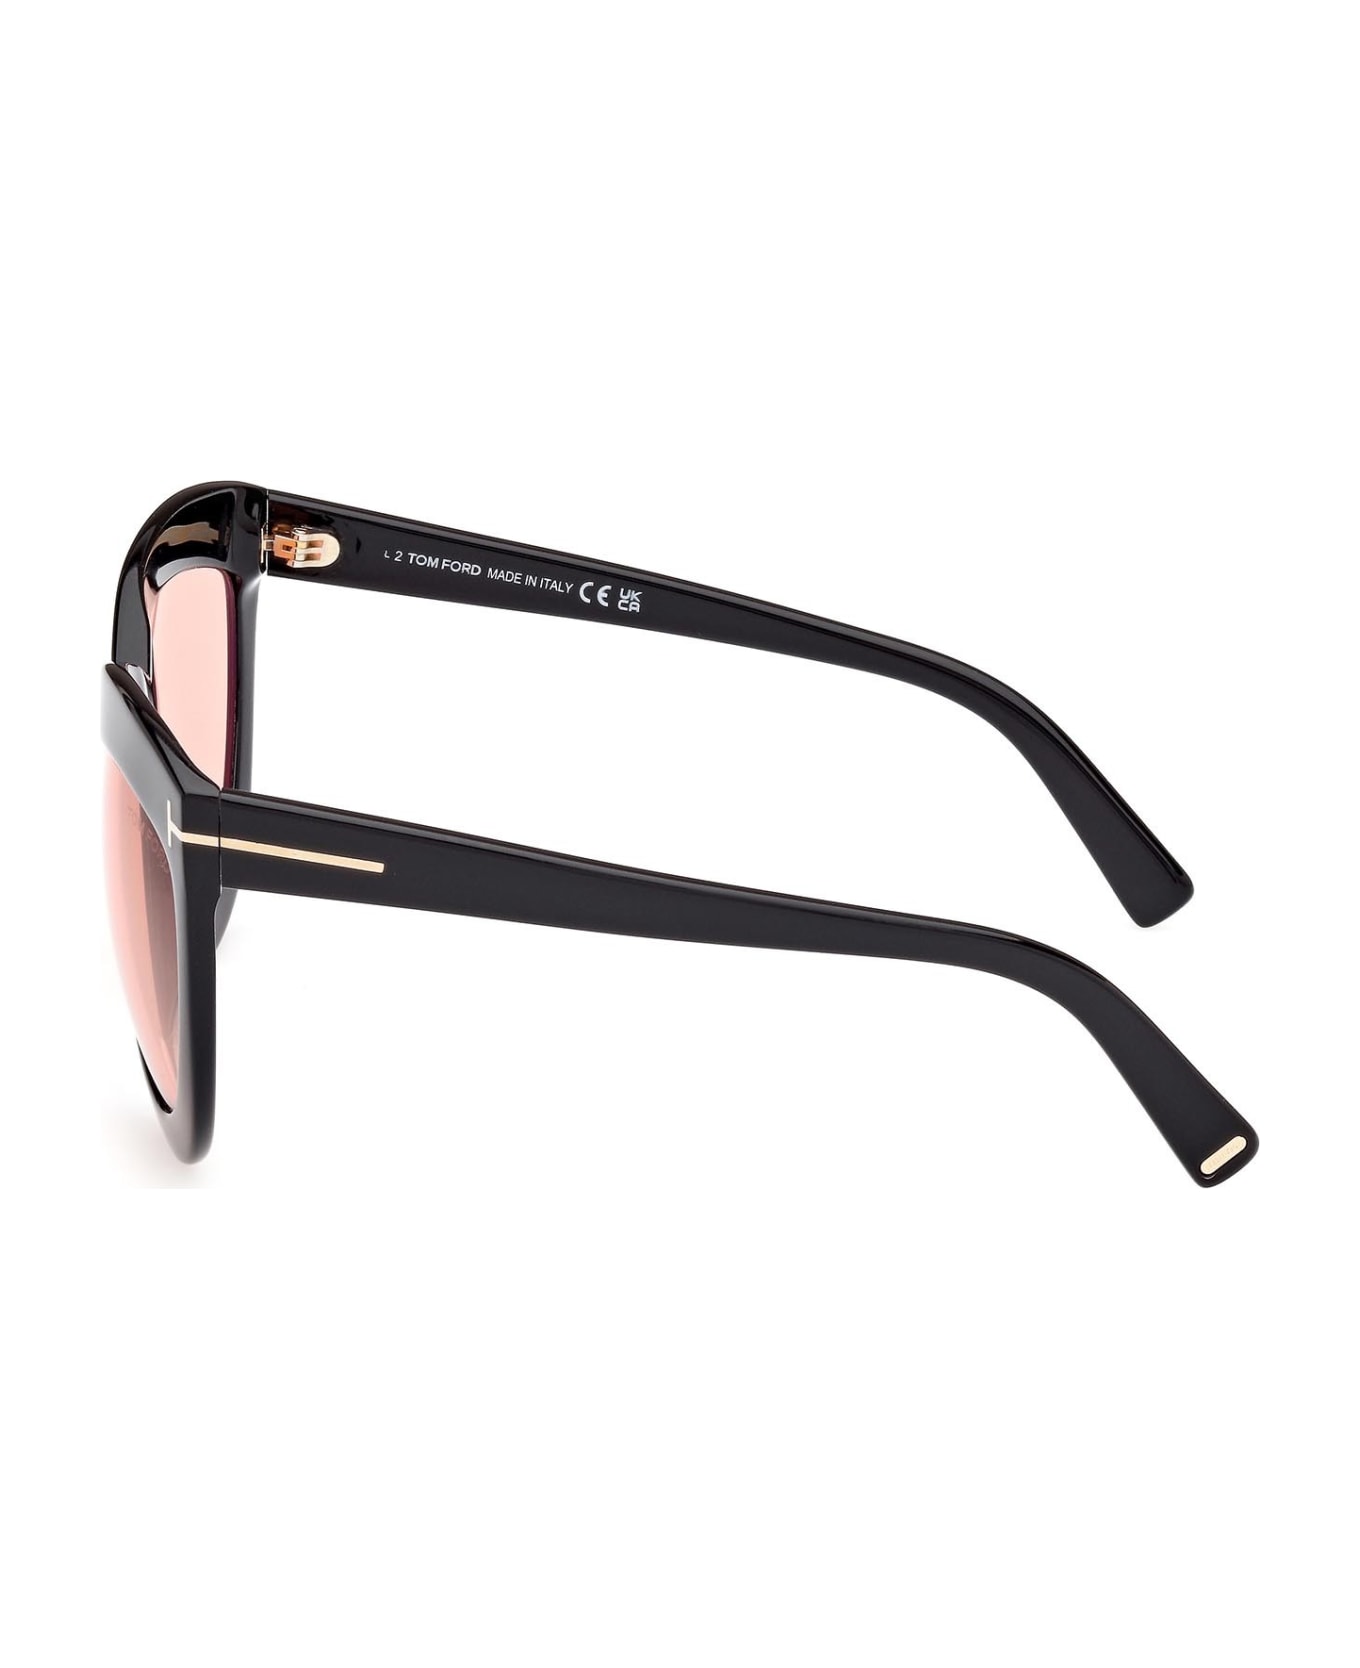 Tom Ford Eyewear Sunglasses サングラス